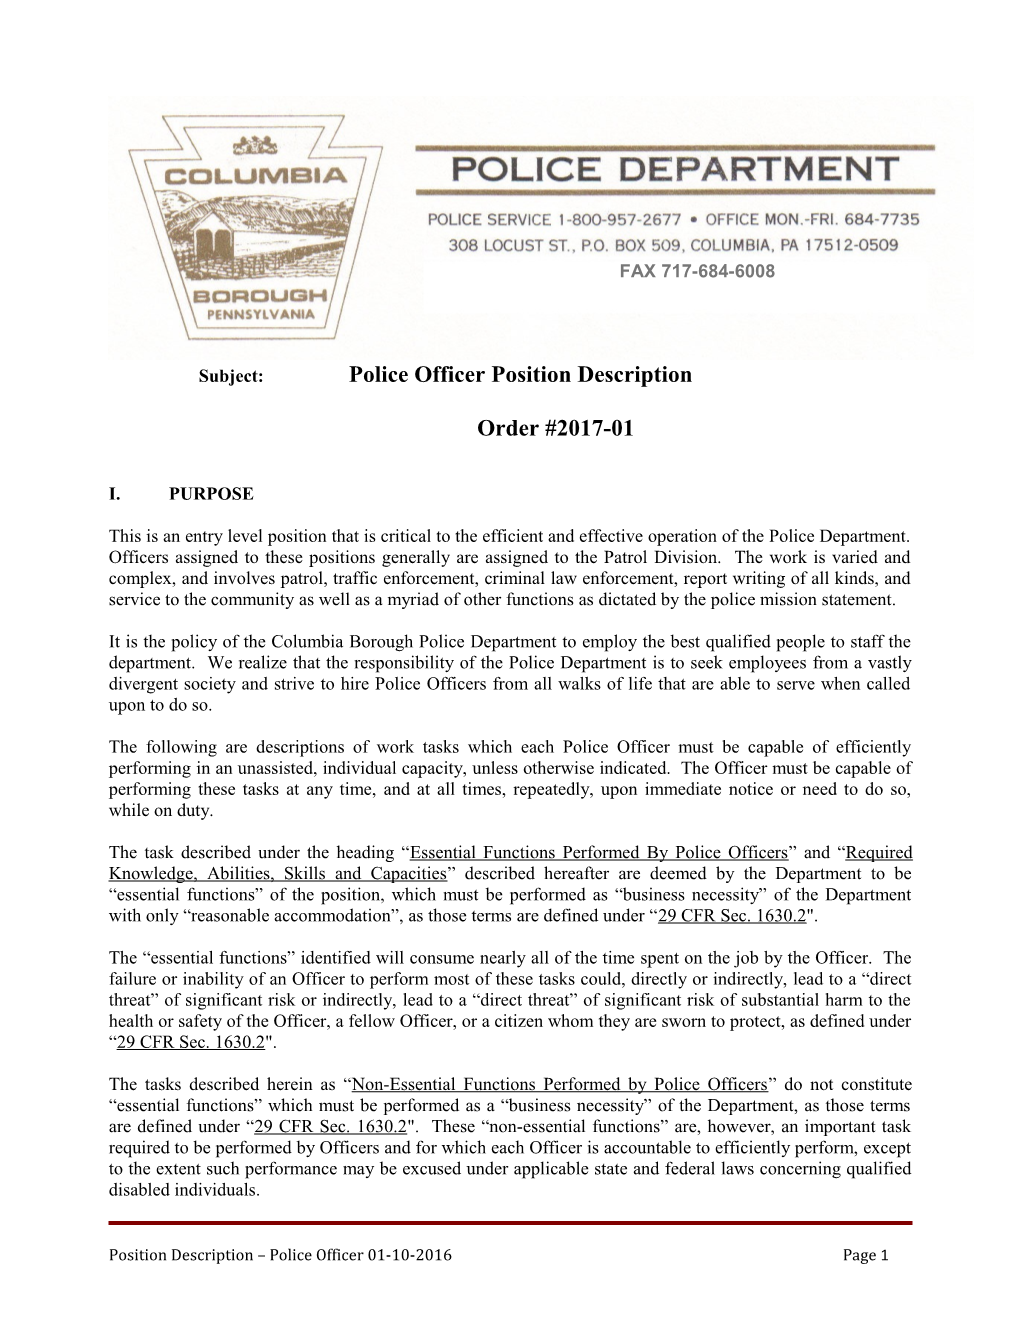 Subject: Police Officer Position Description